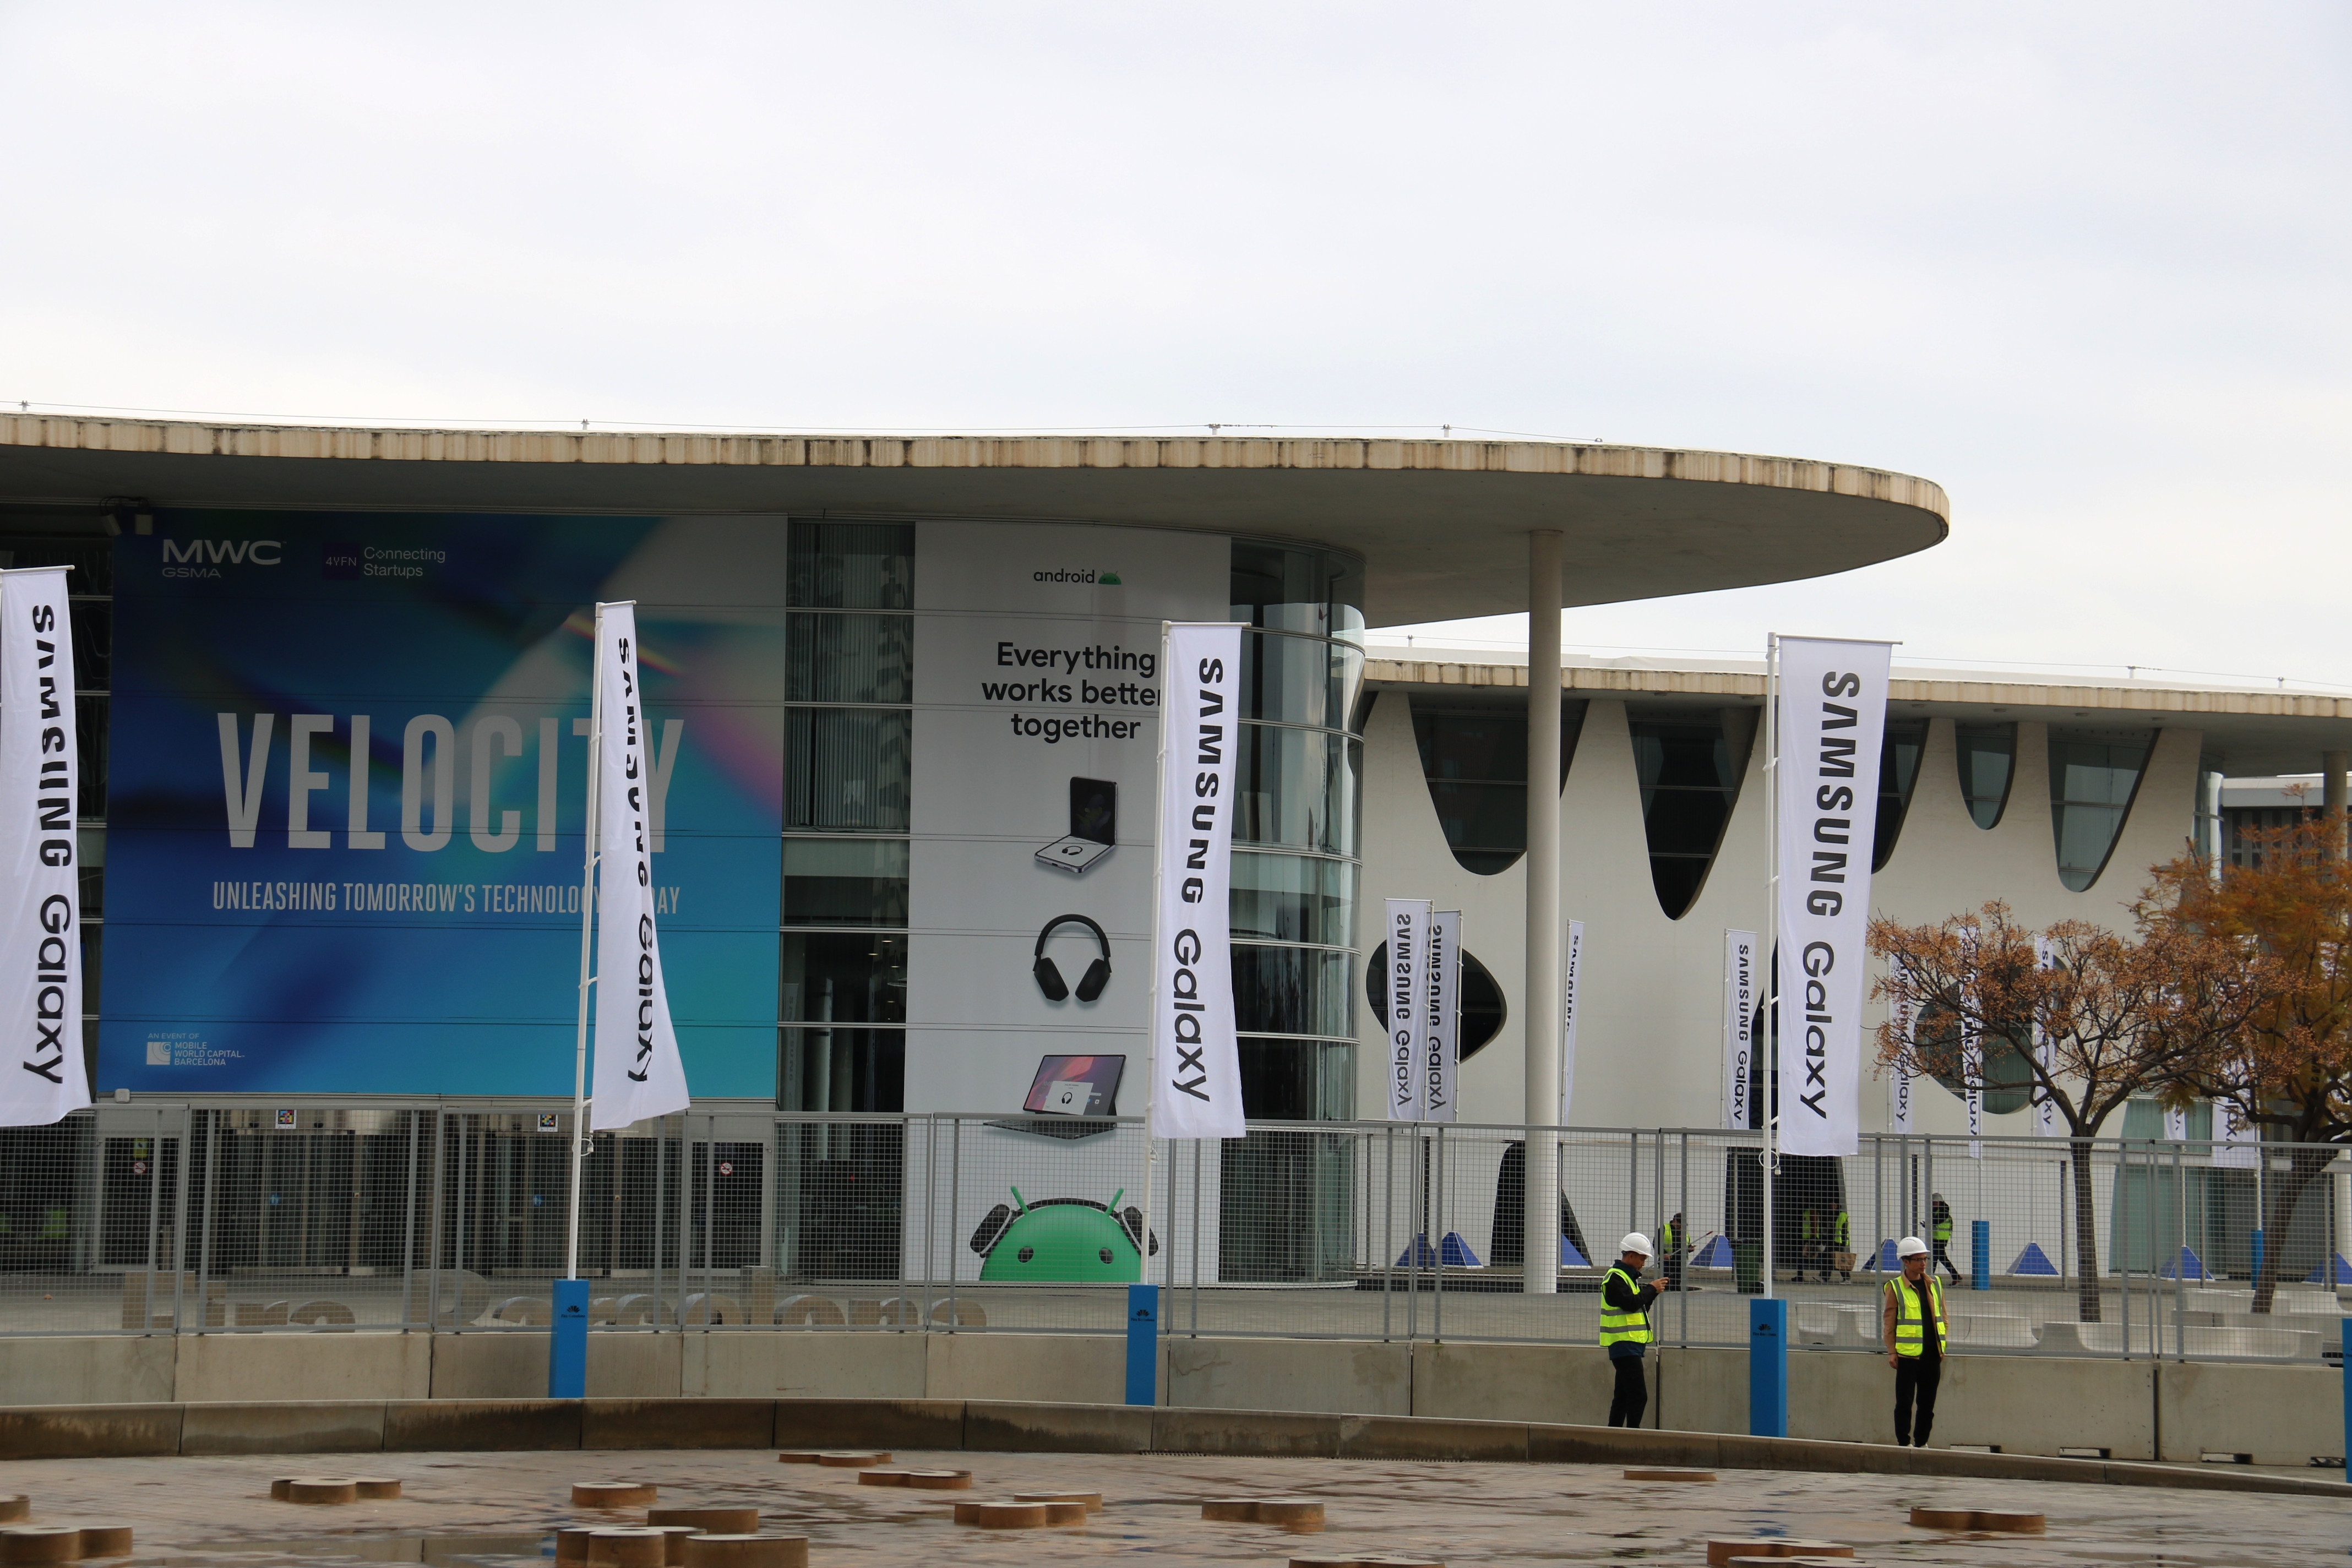 Mobile World Congress or MWC posters at Fira de Gran Via exhibition halls